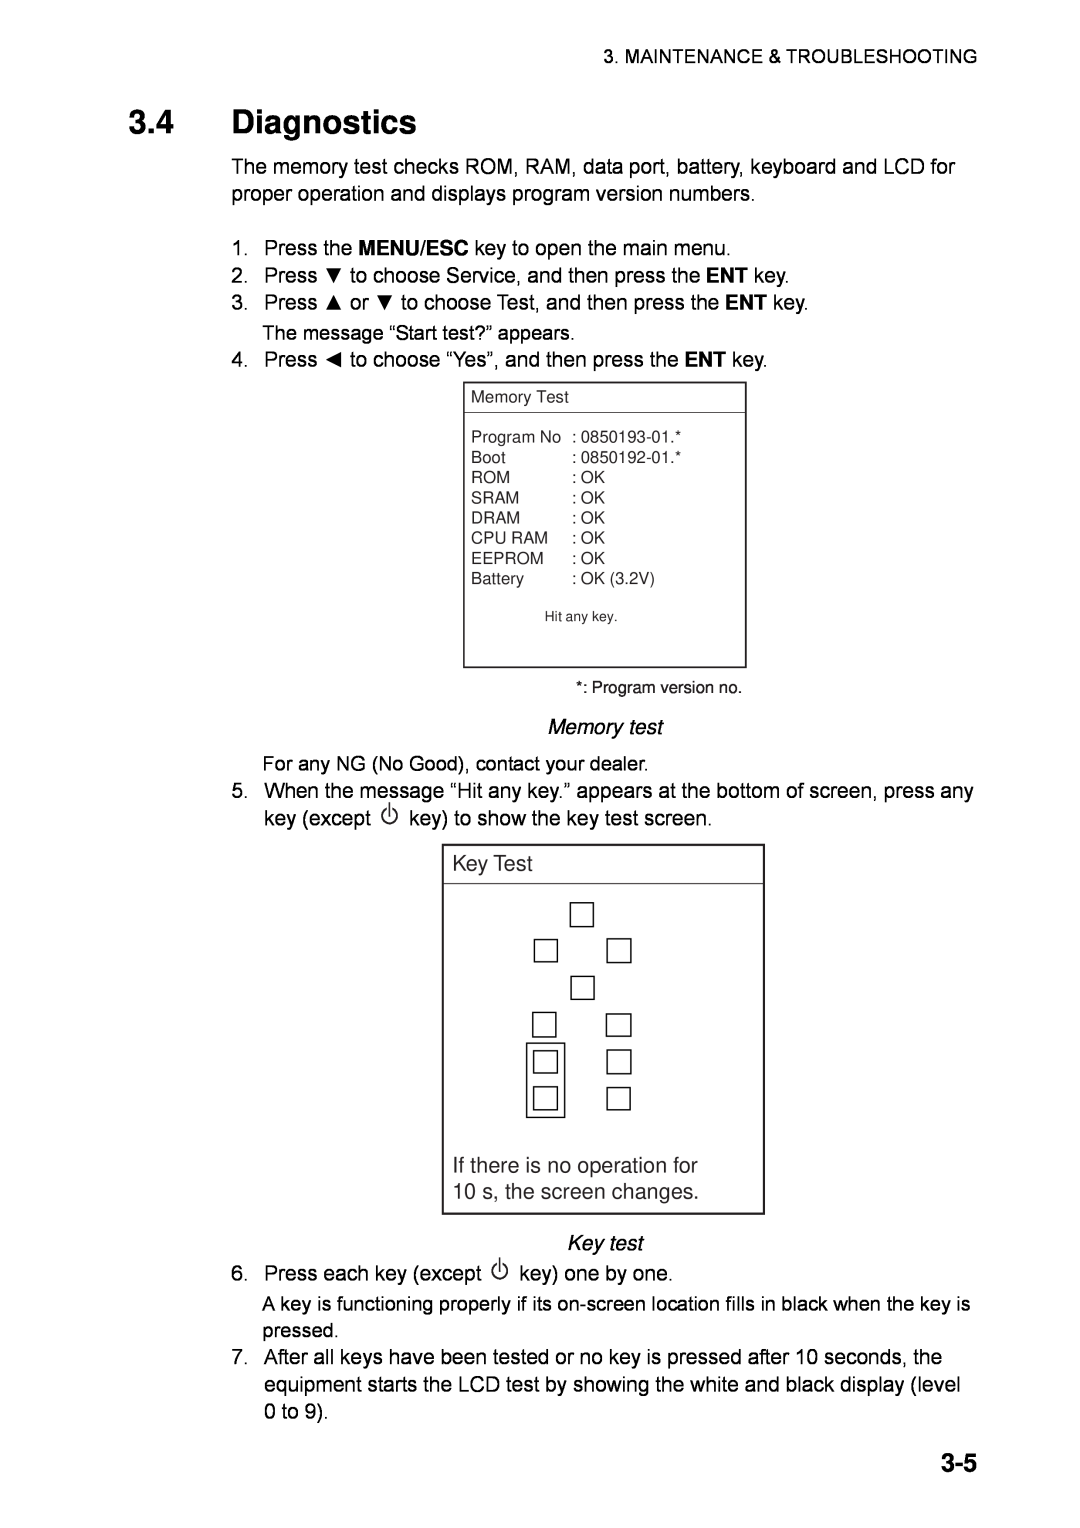 Furuno NX-700B manual 3.4Diagnostics, Key Test, Memory test, Key test 